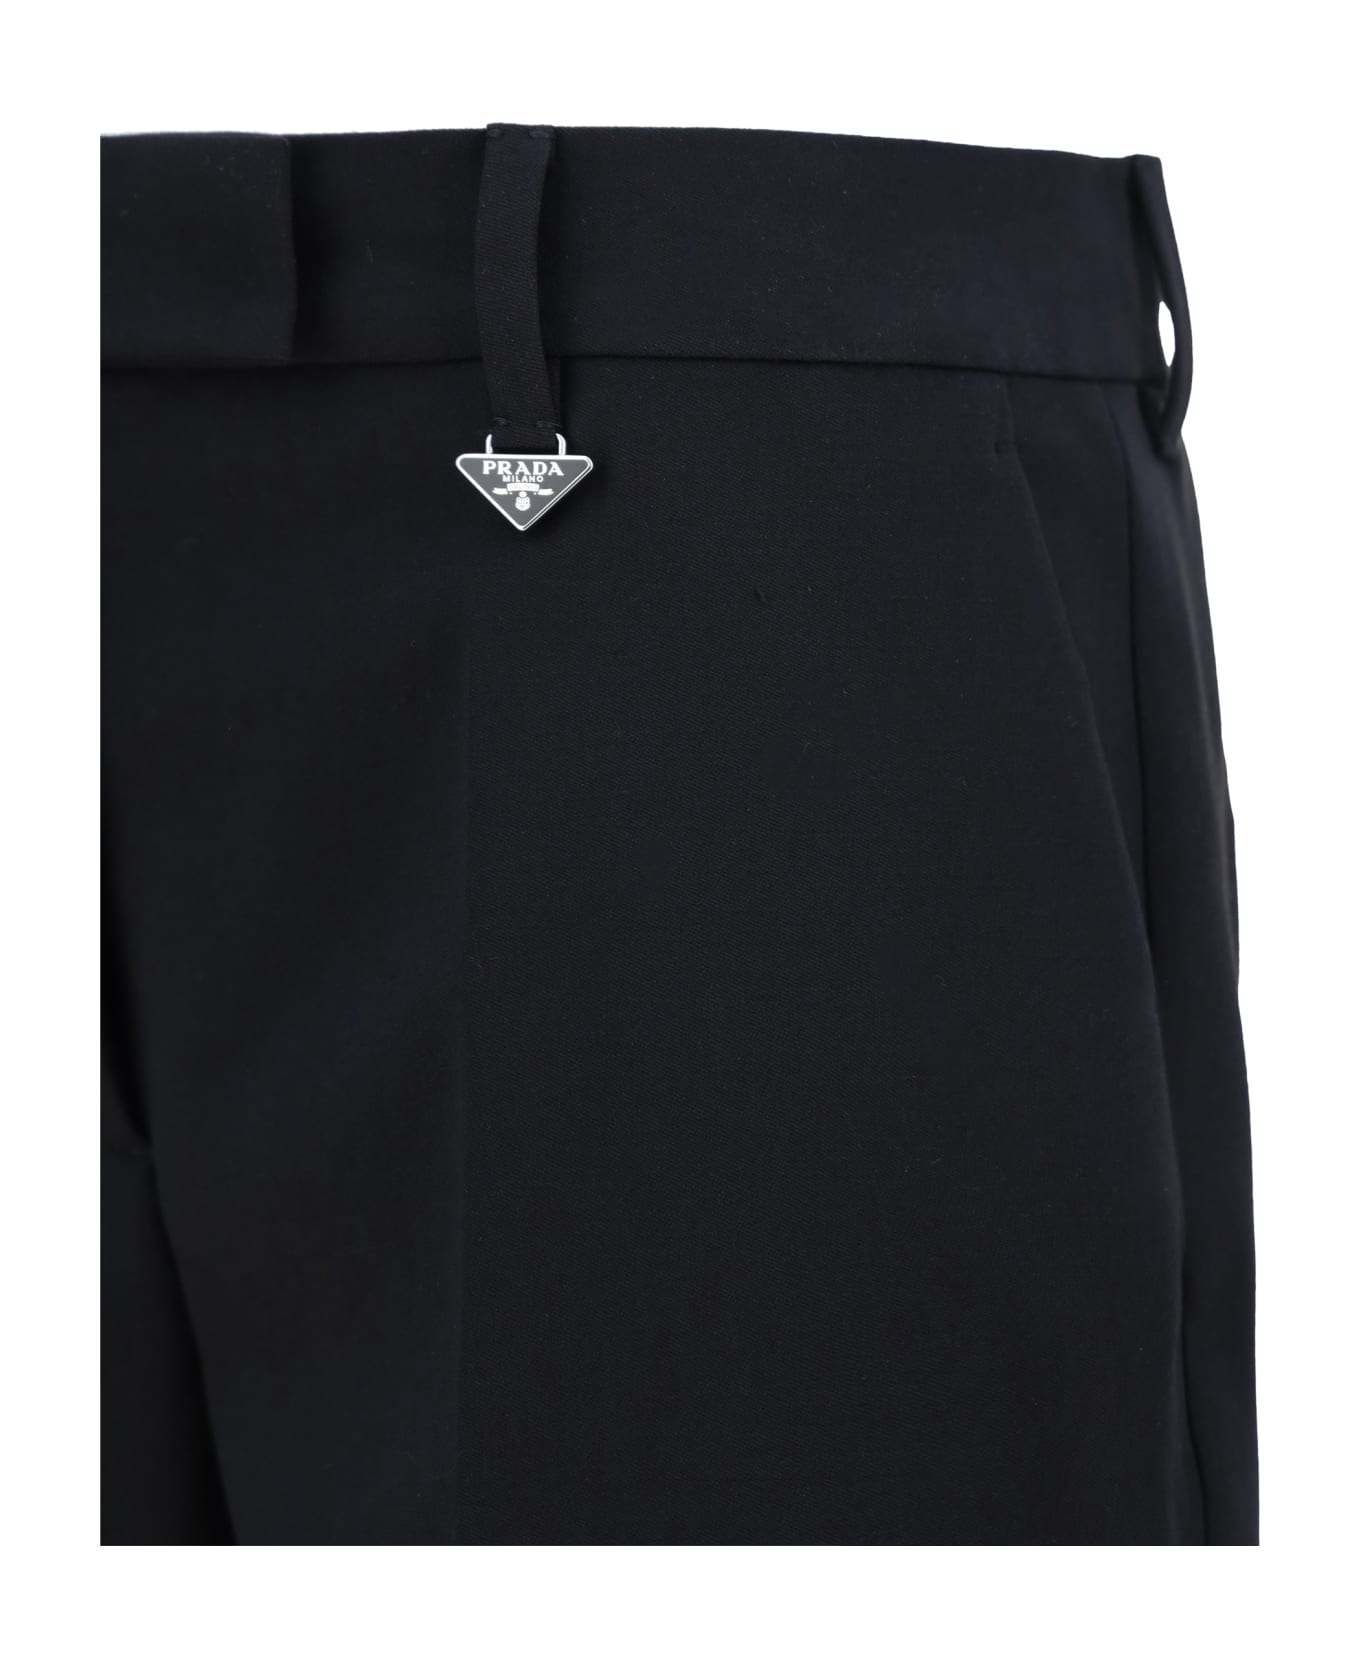 Prada Tailoring Pants - Black